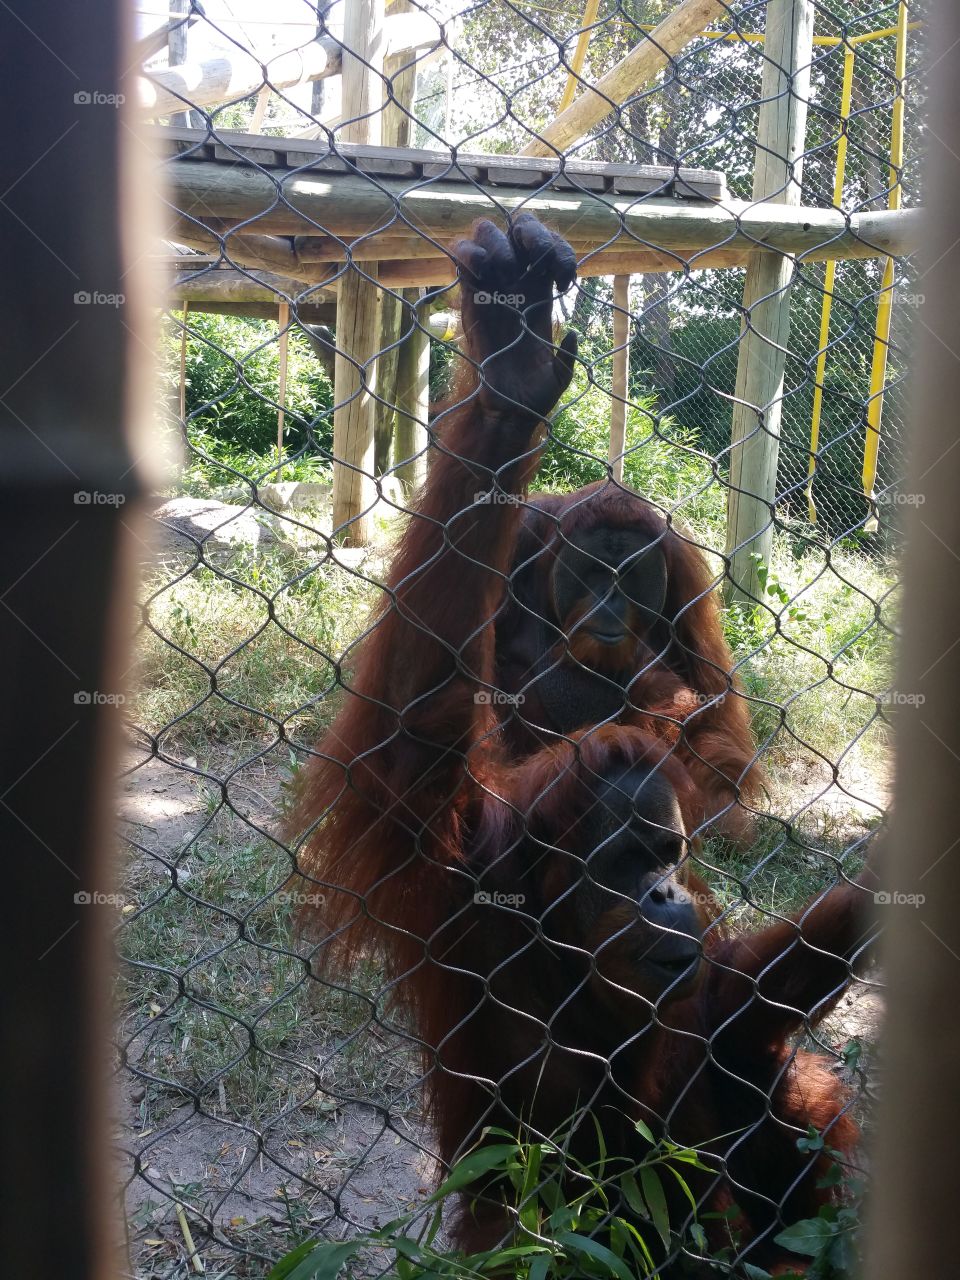 Orangutans Enclosure. At the Zoo